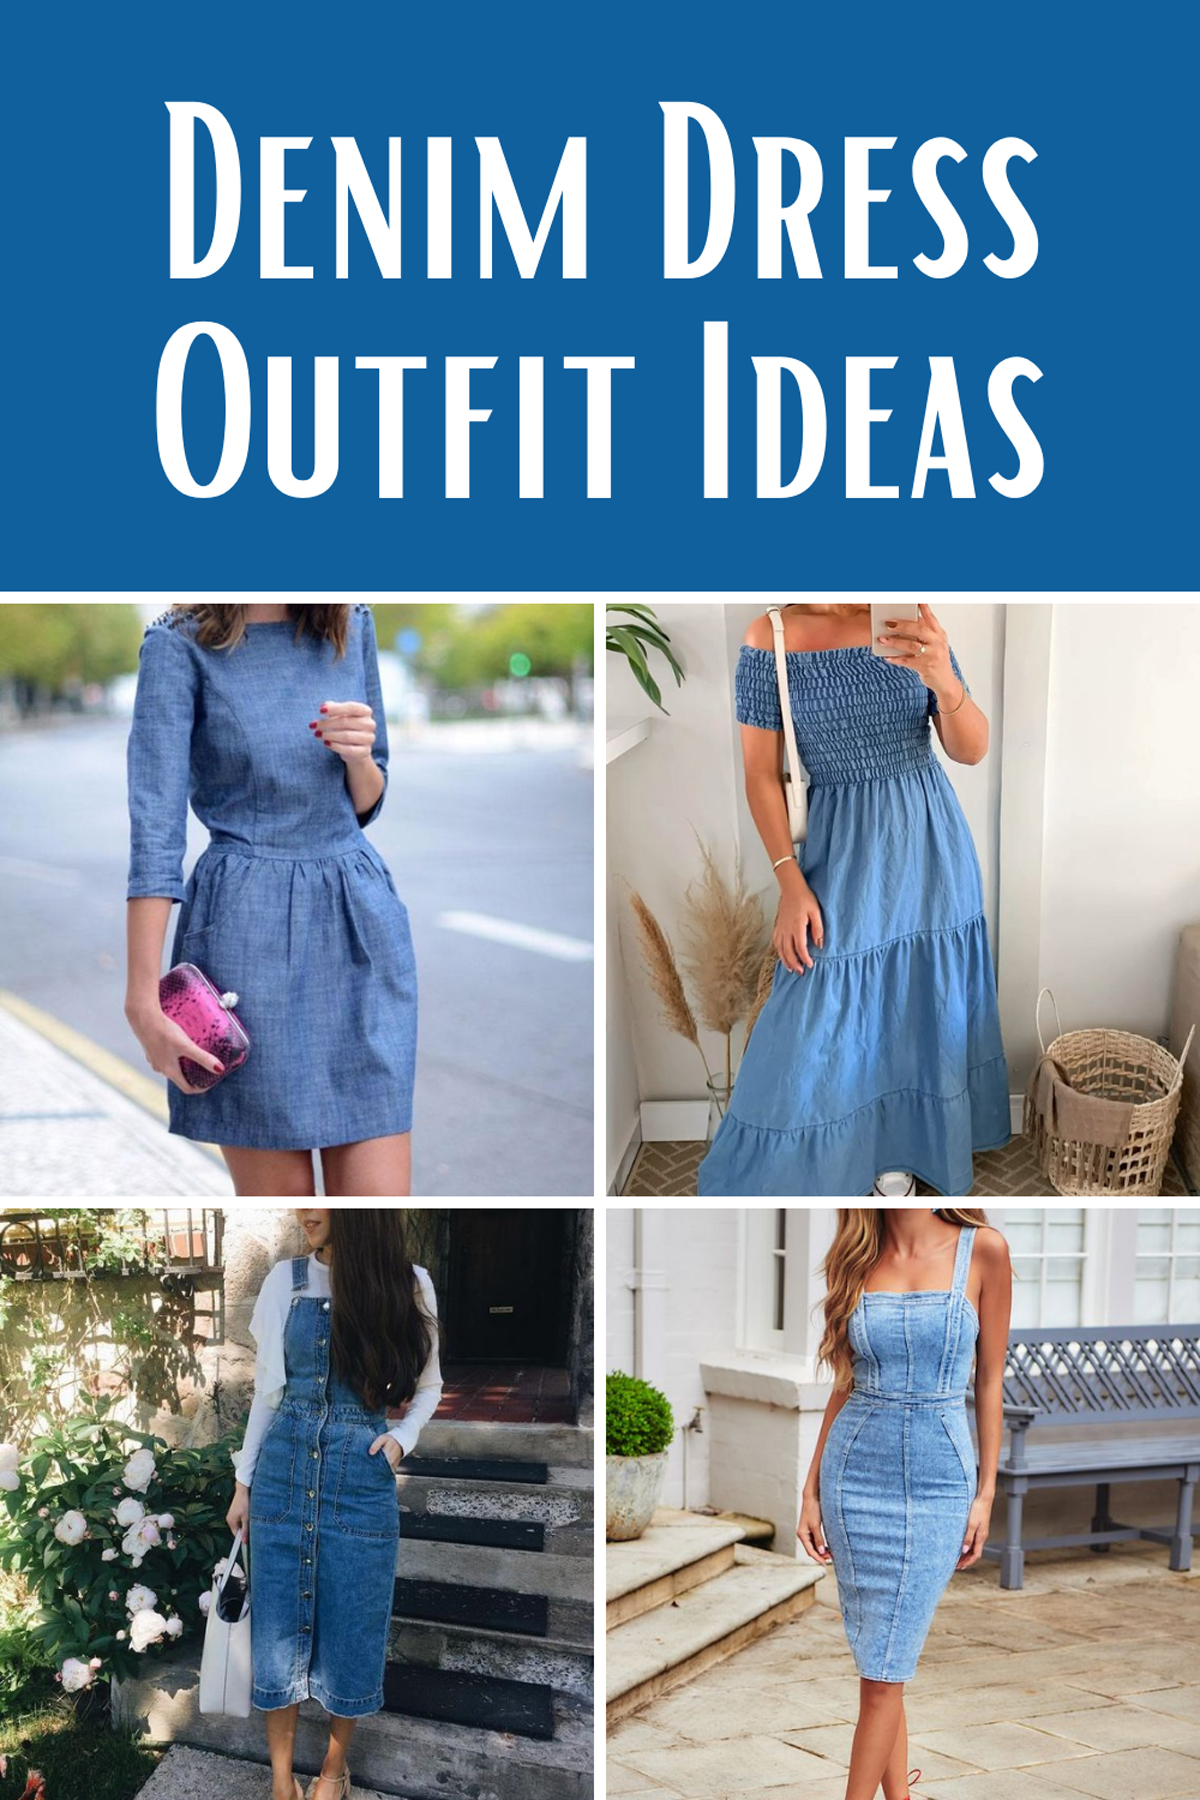 Jean Dress Outfit Ideas